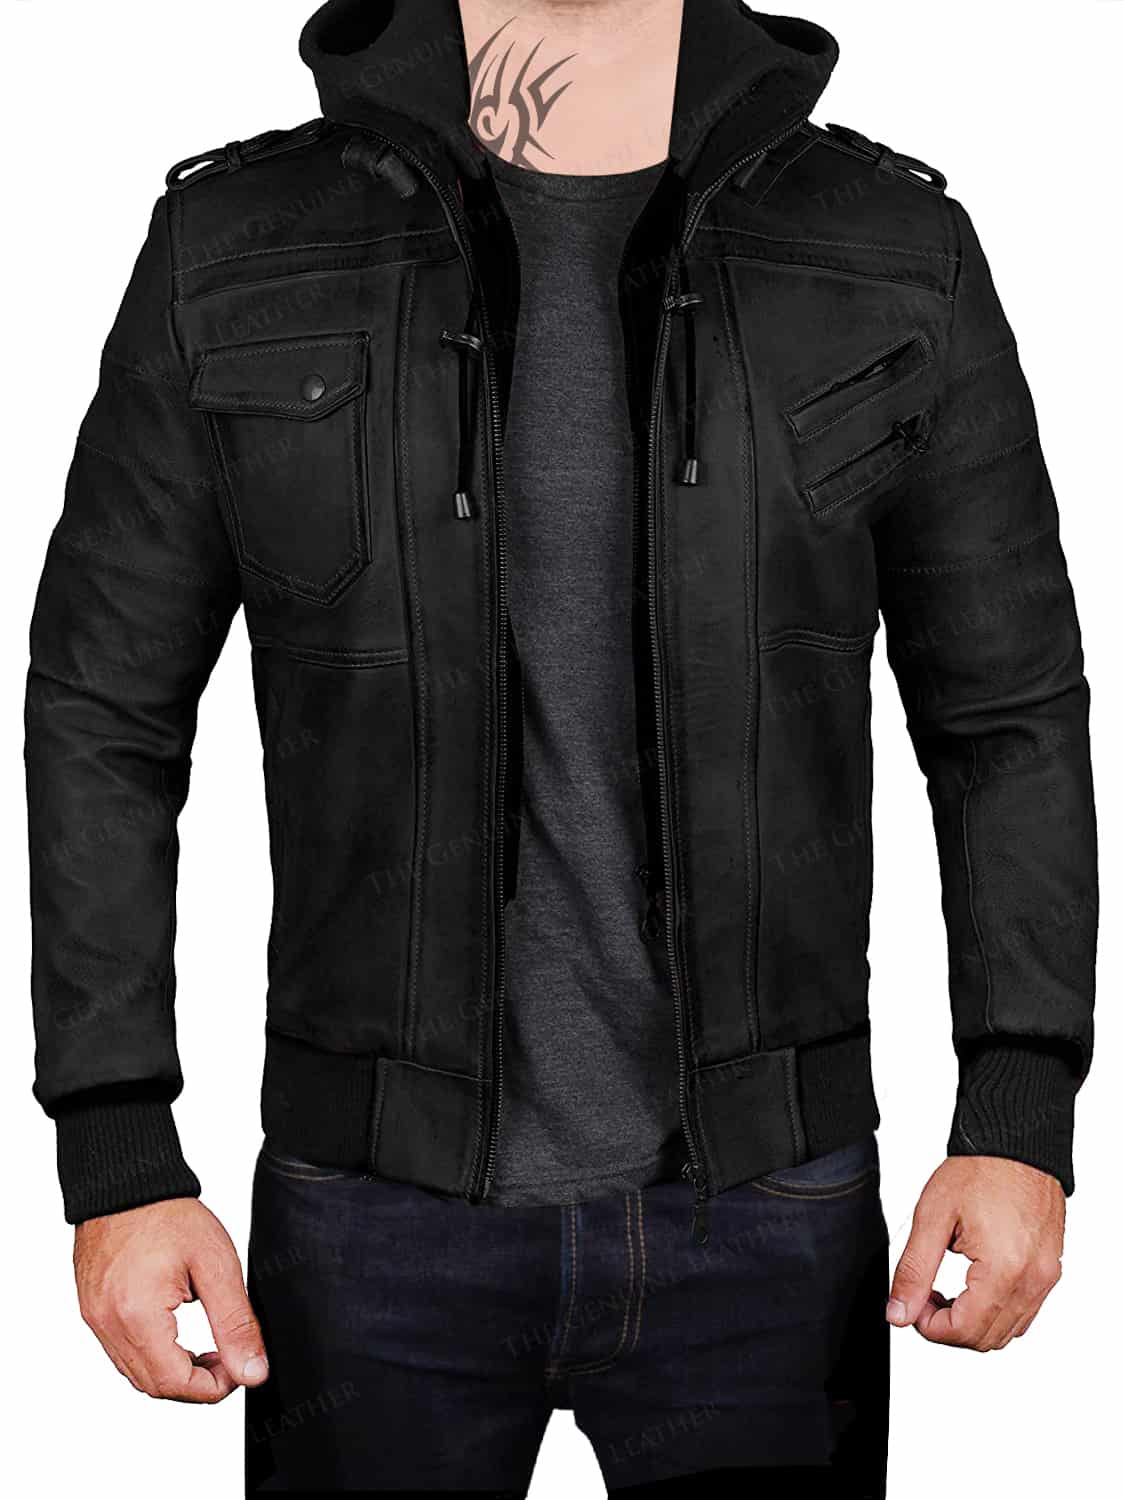 Black Hood Removable Leather Jacket